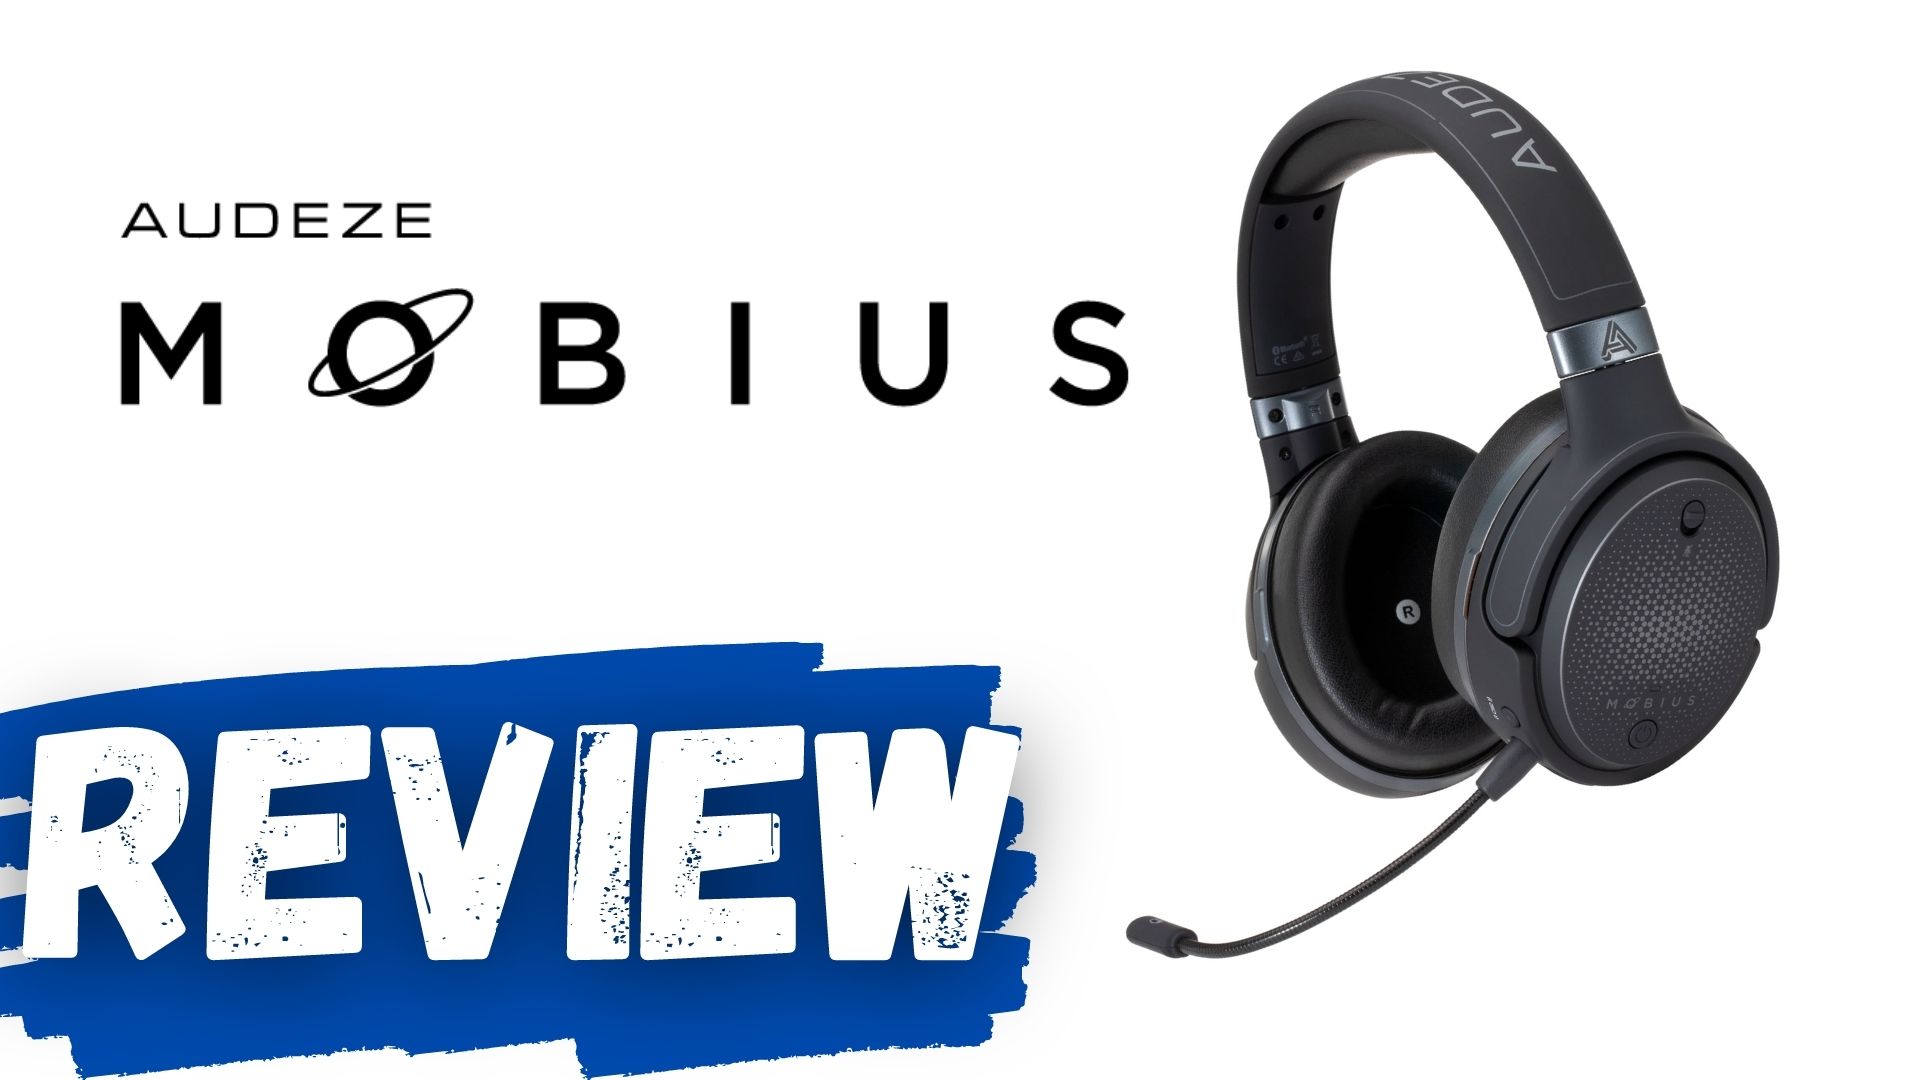 Hardware Review: Audeze Mobius Headphones